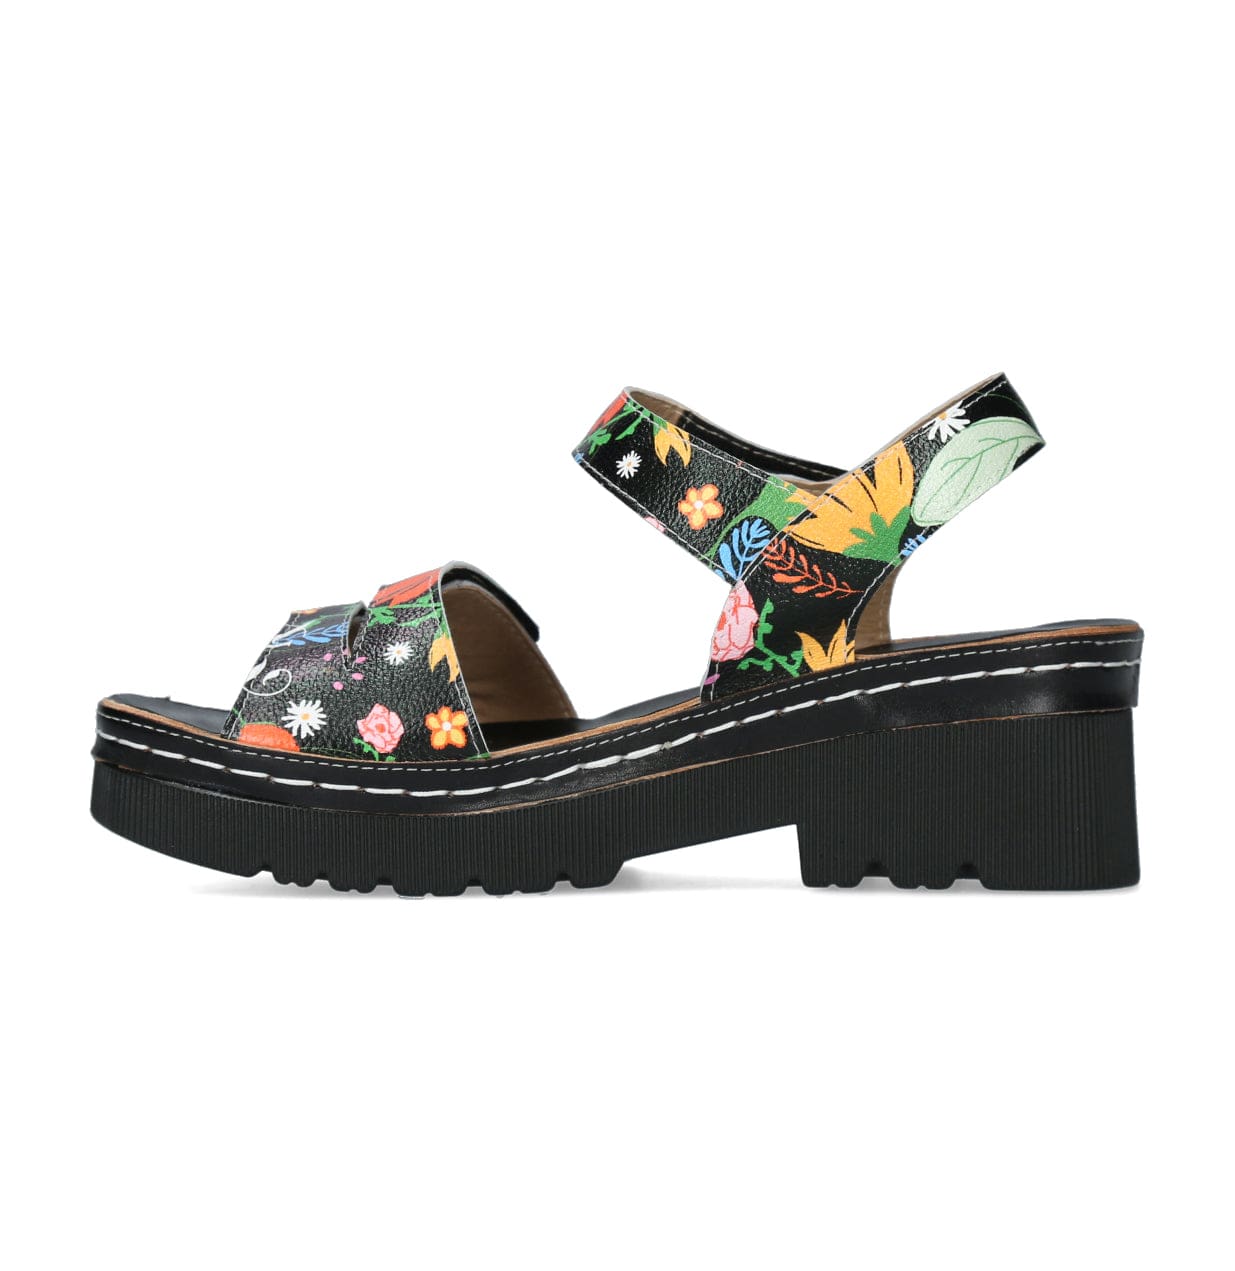 Chaussures LEXIAO 03 Fleur - Sandale